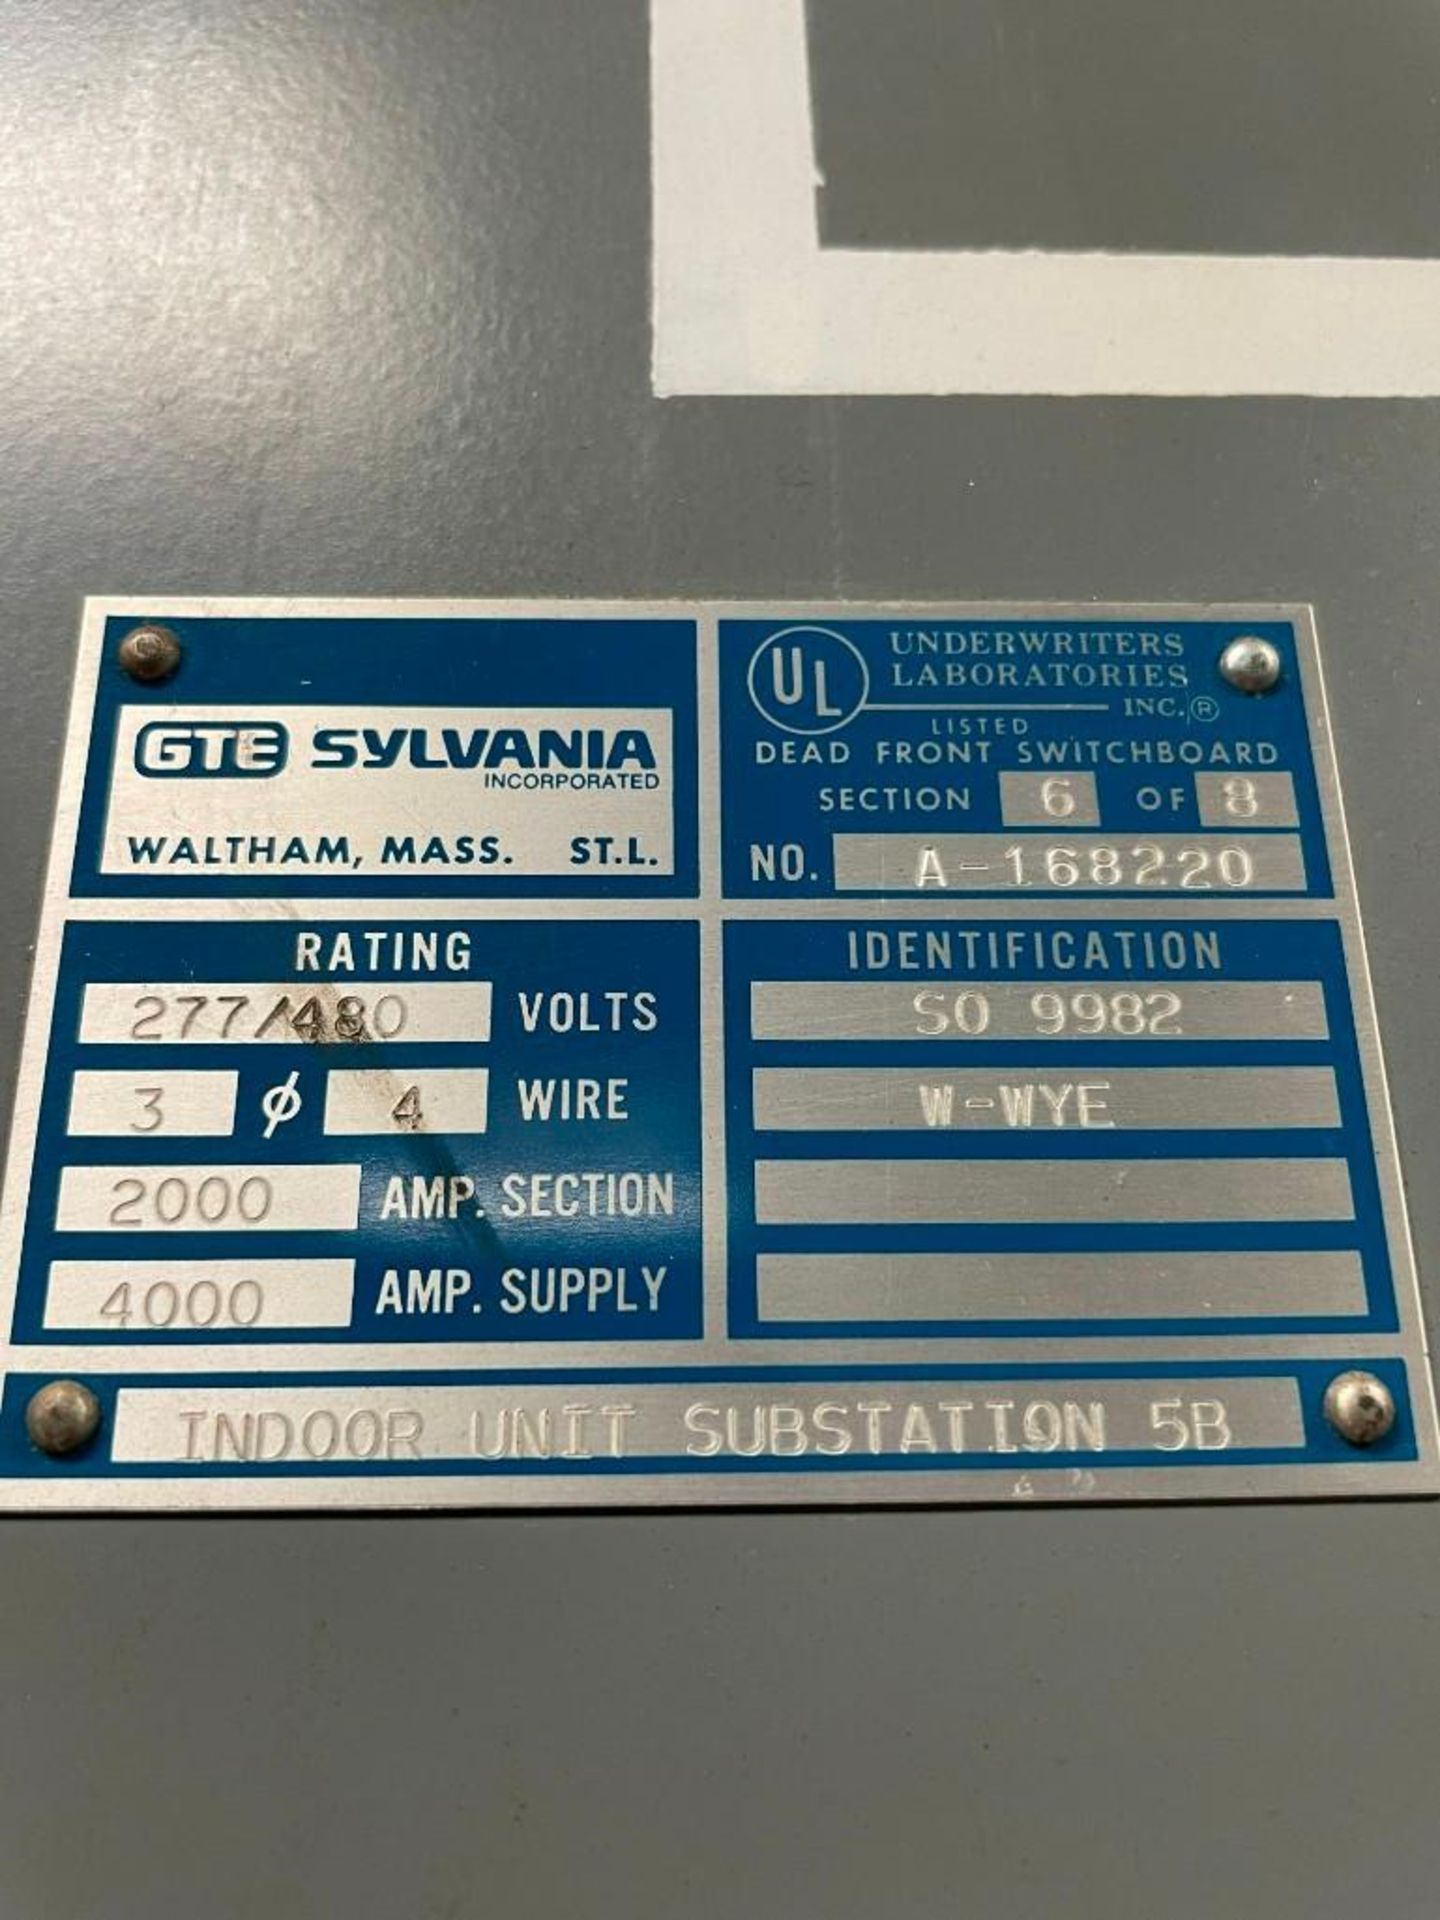 Sylvania Indoor Unit Substation 13.8KV - Image 5 of 5